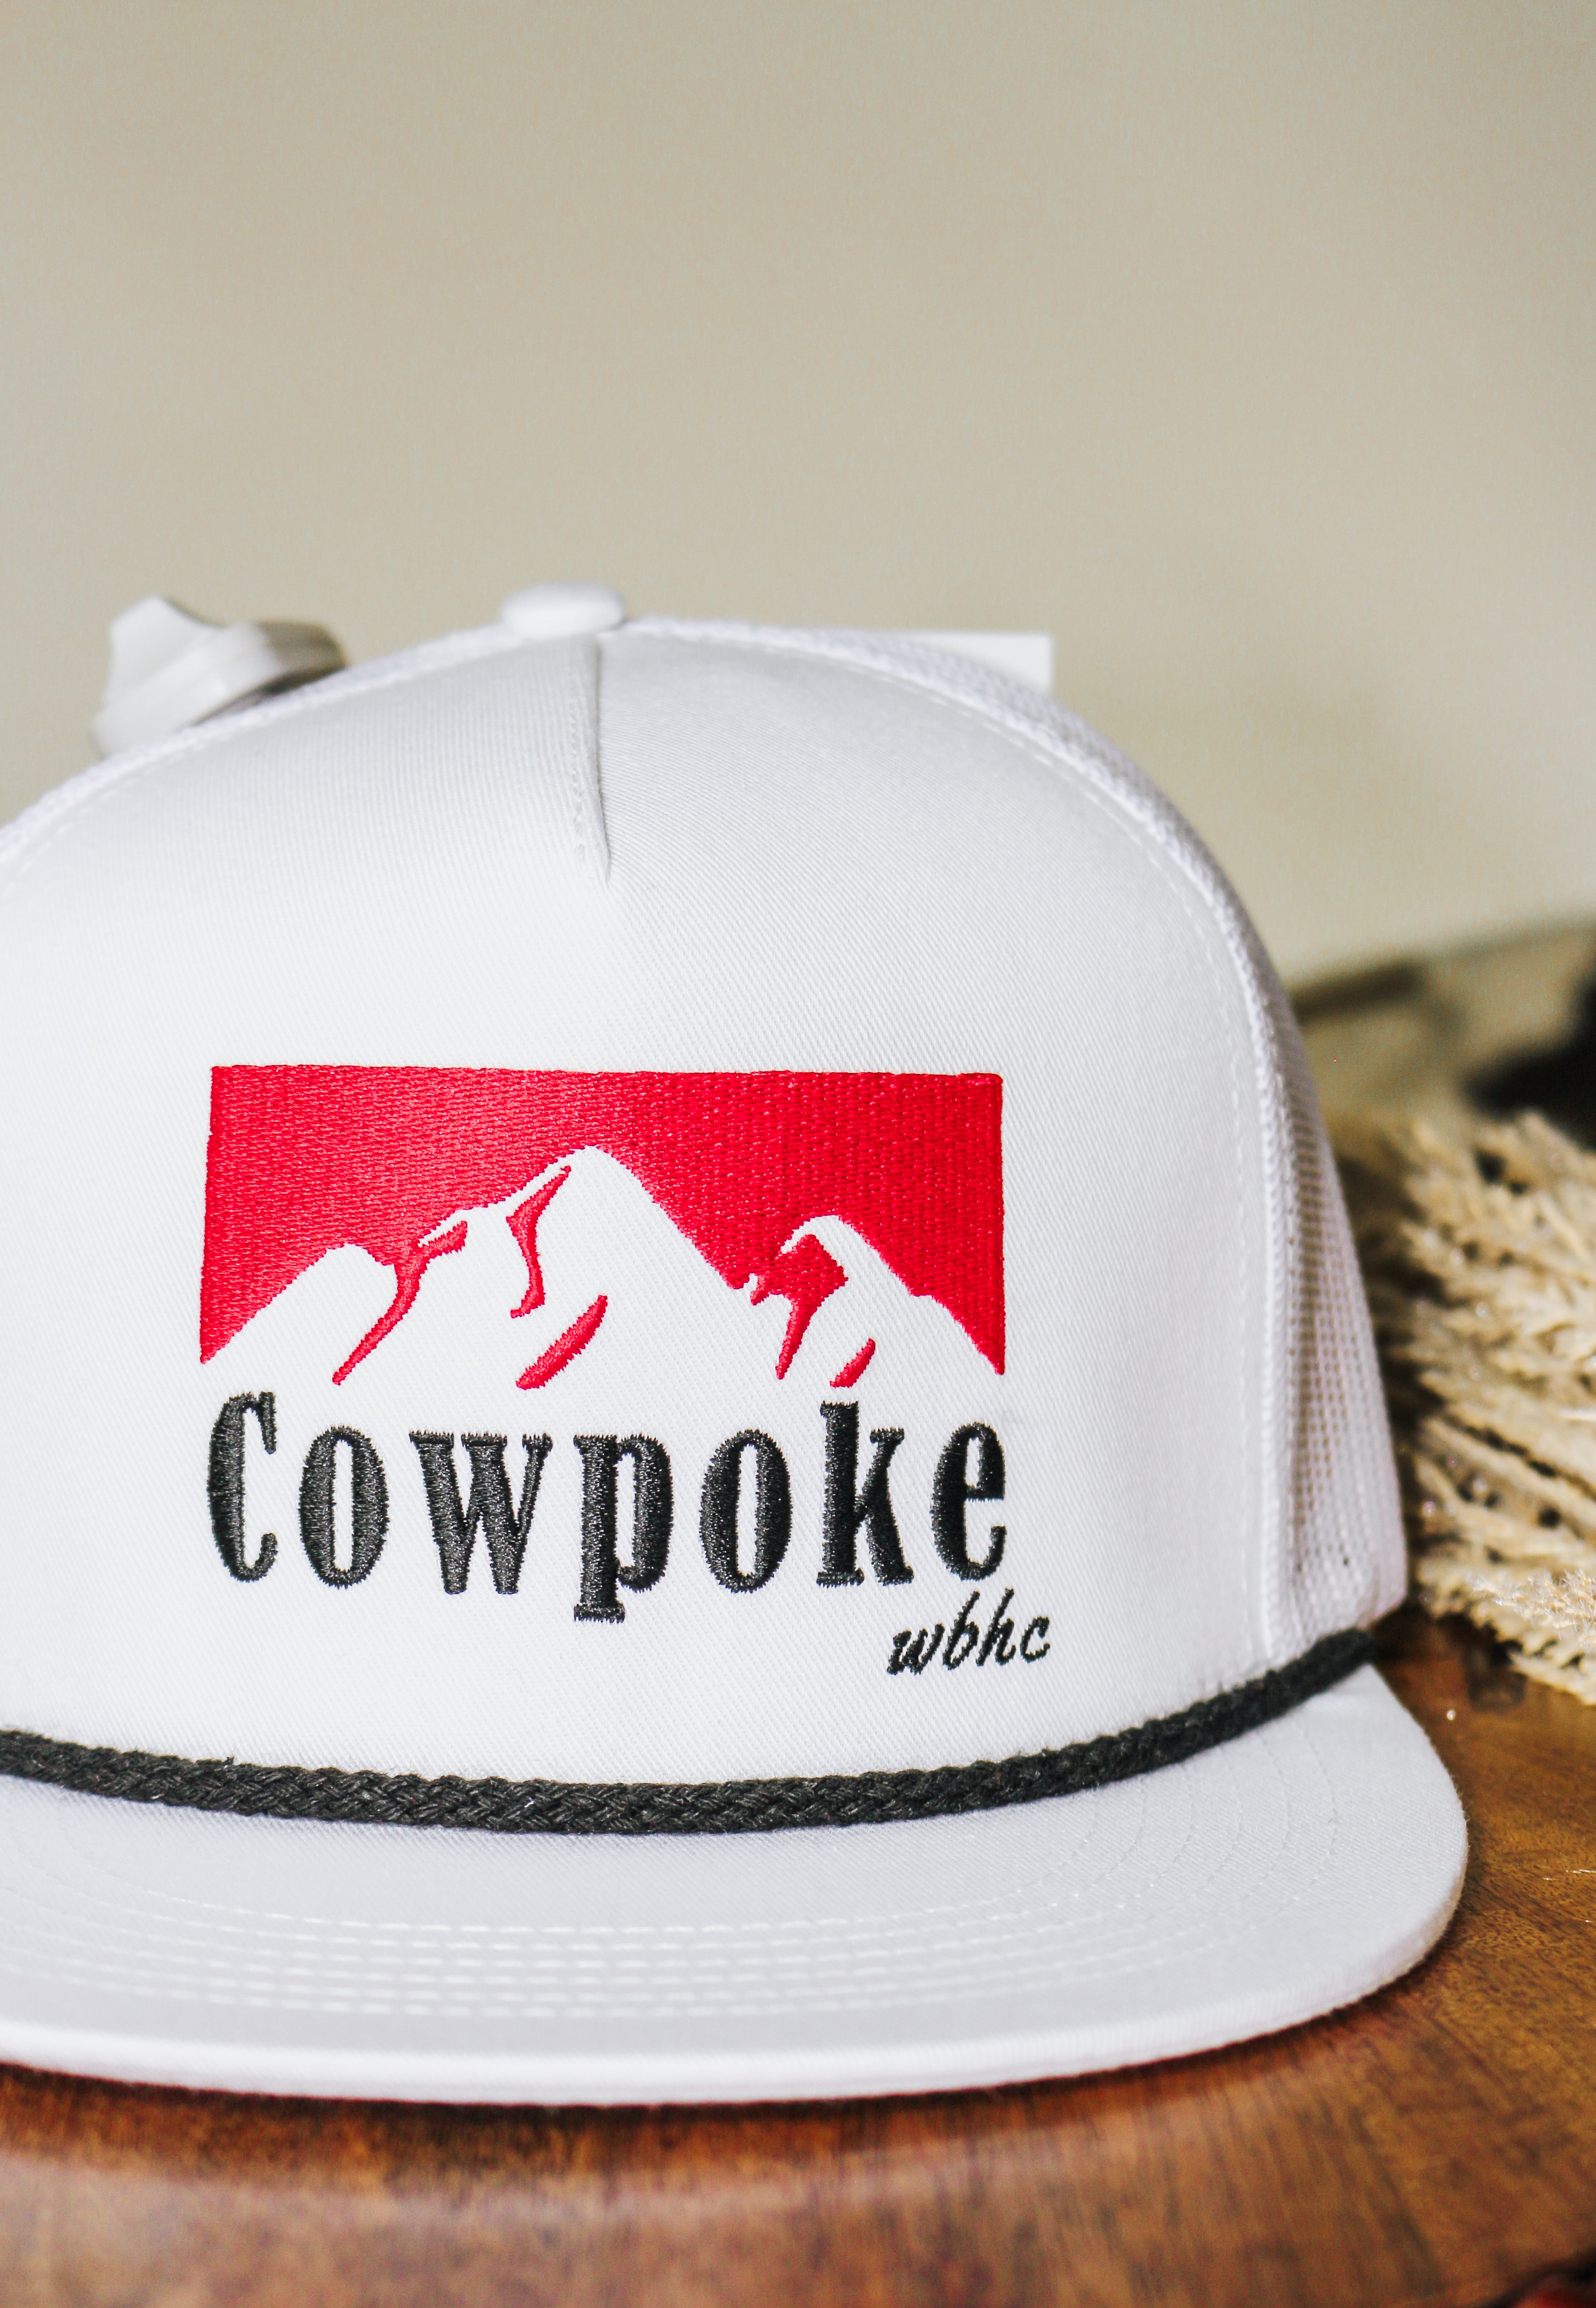 Cowpoke White On White Mesh Cap – Dales Clothing Inc